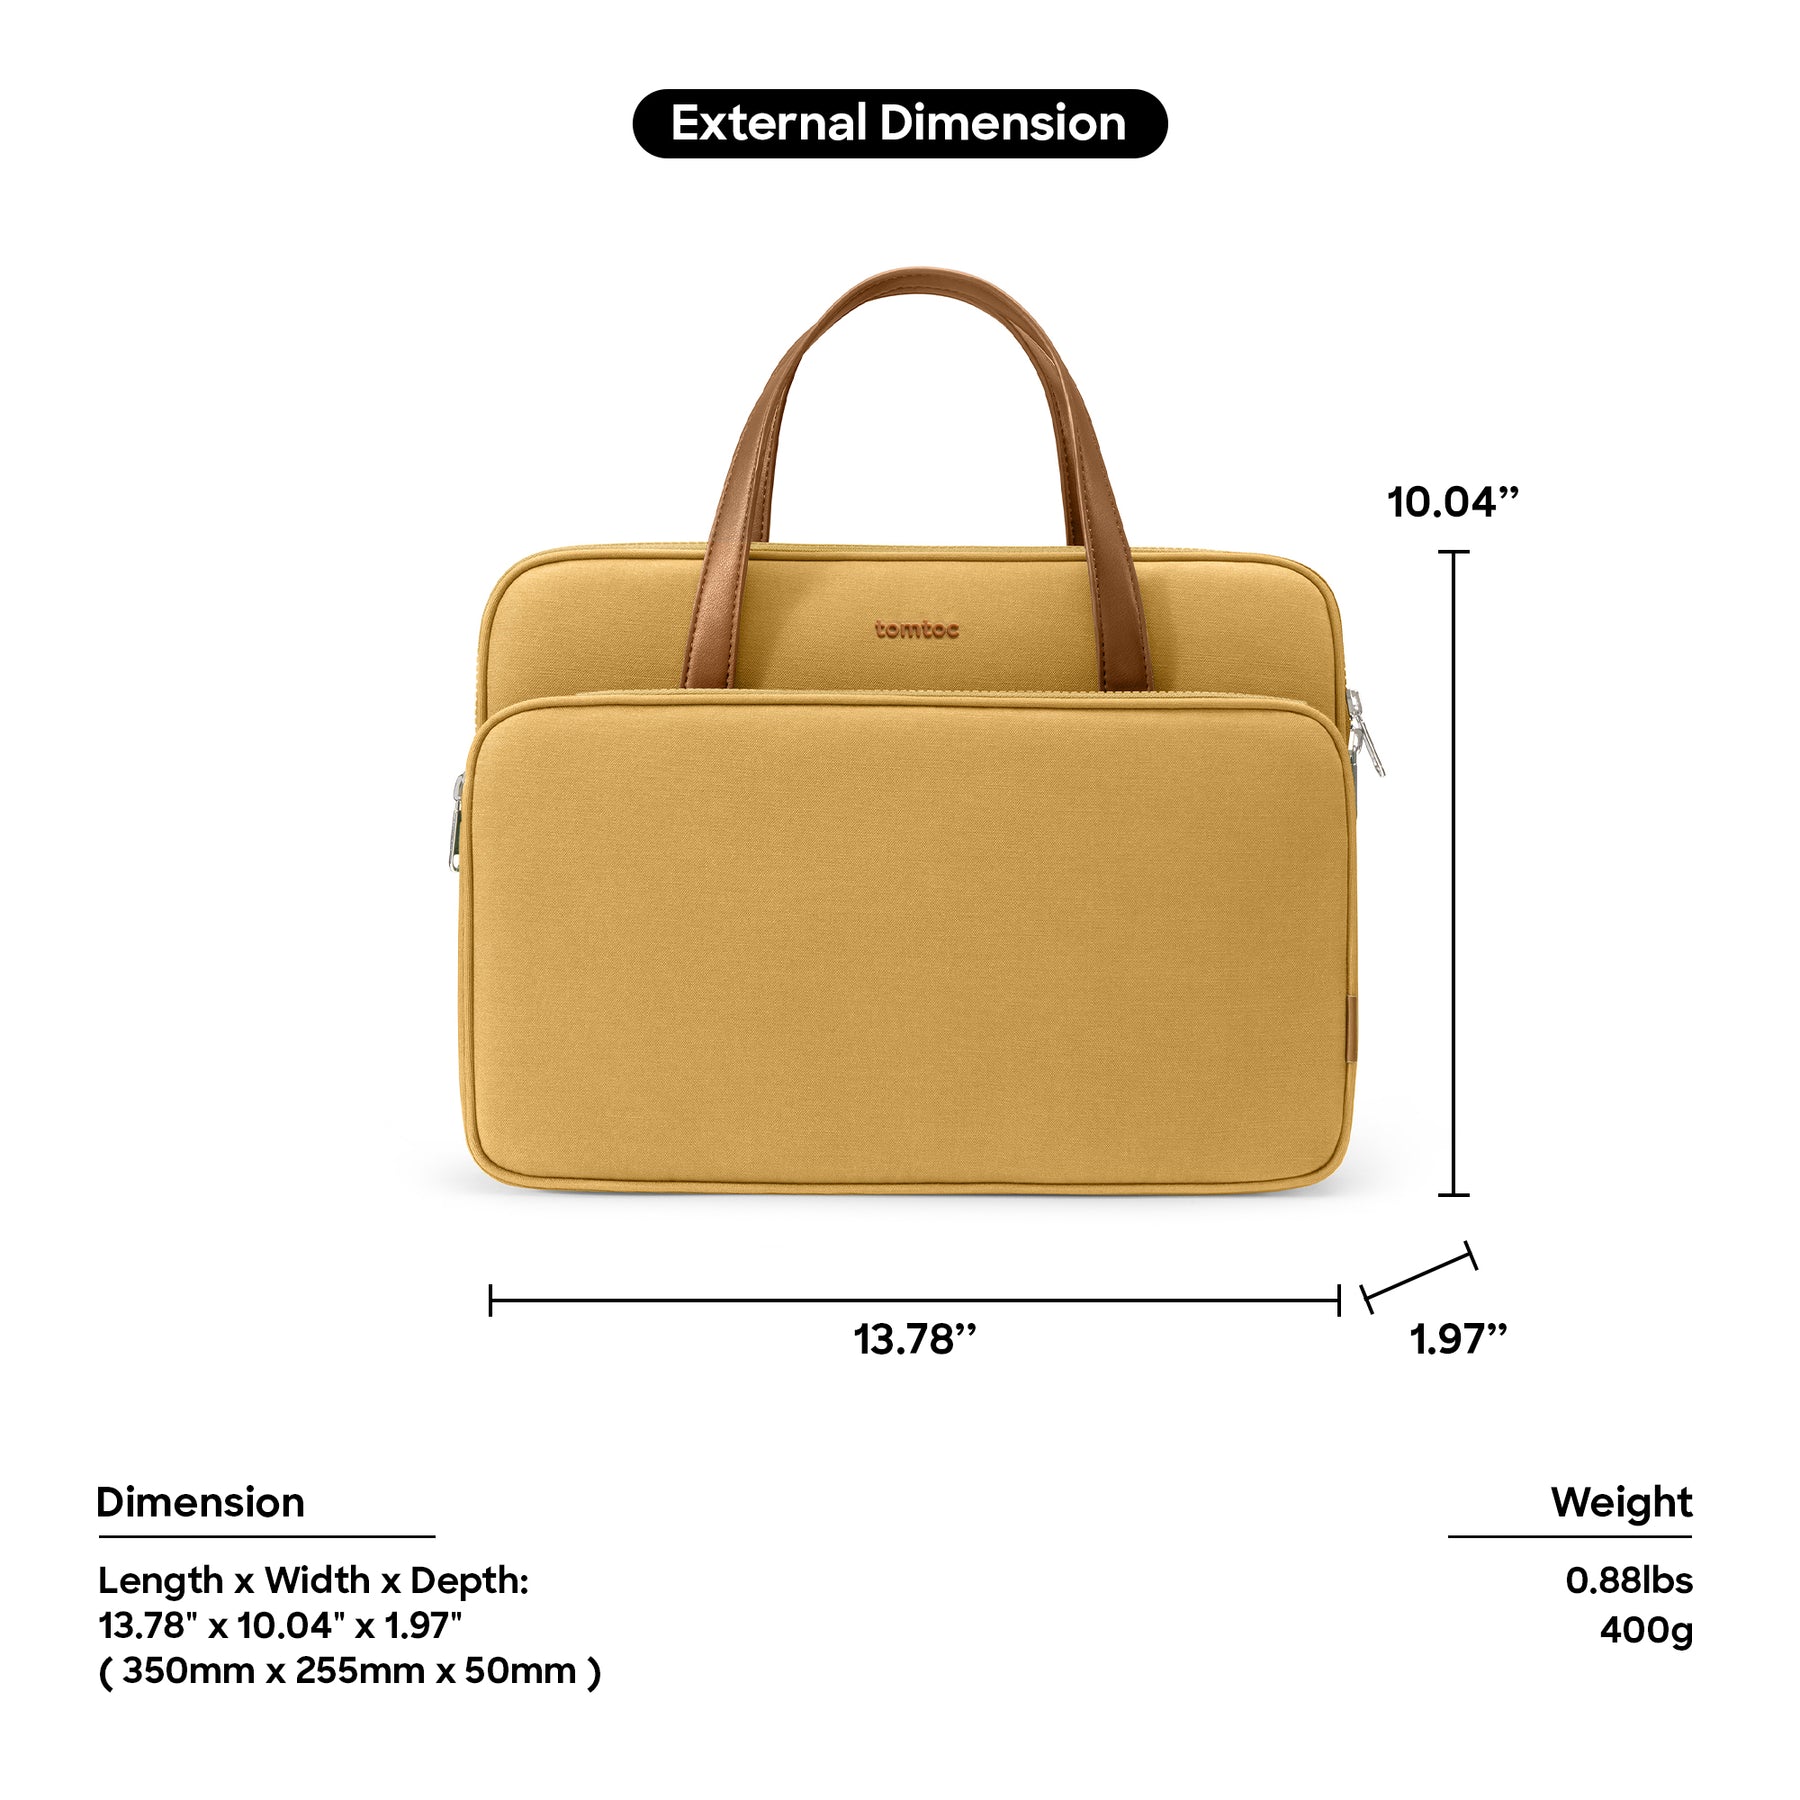 tomtoc 14 Inch Lady Laptop Bag / Handbag Women / Ladies Bag - Yellow